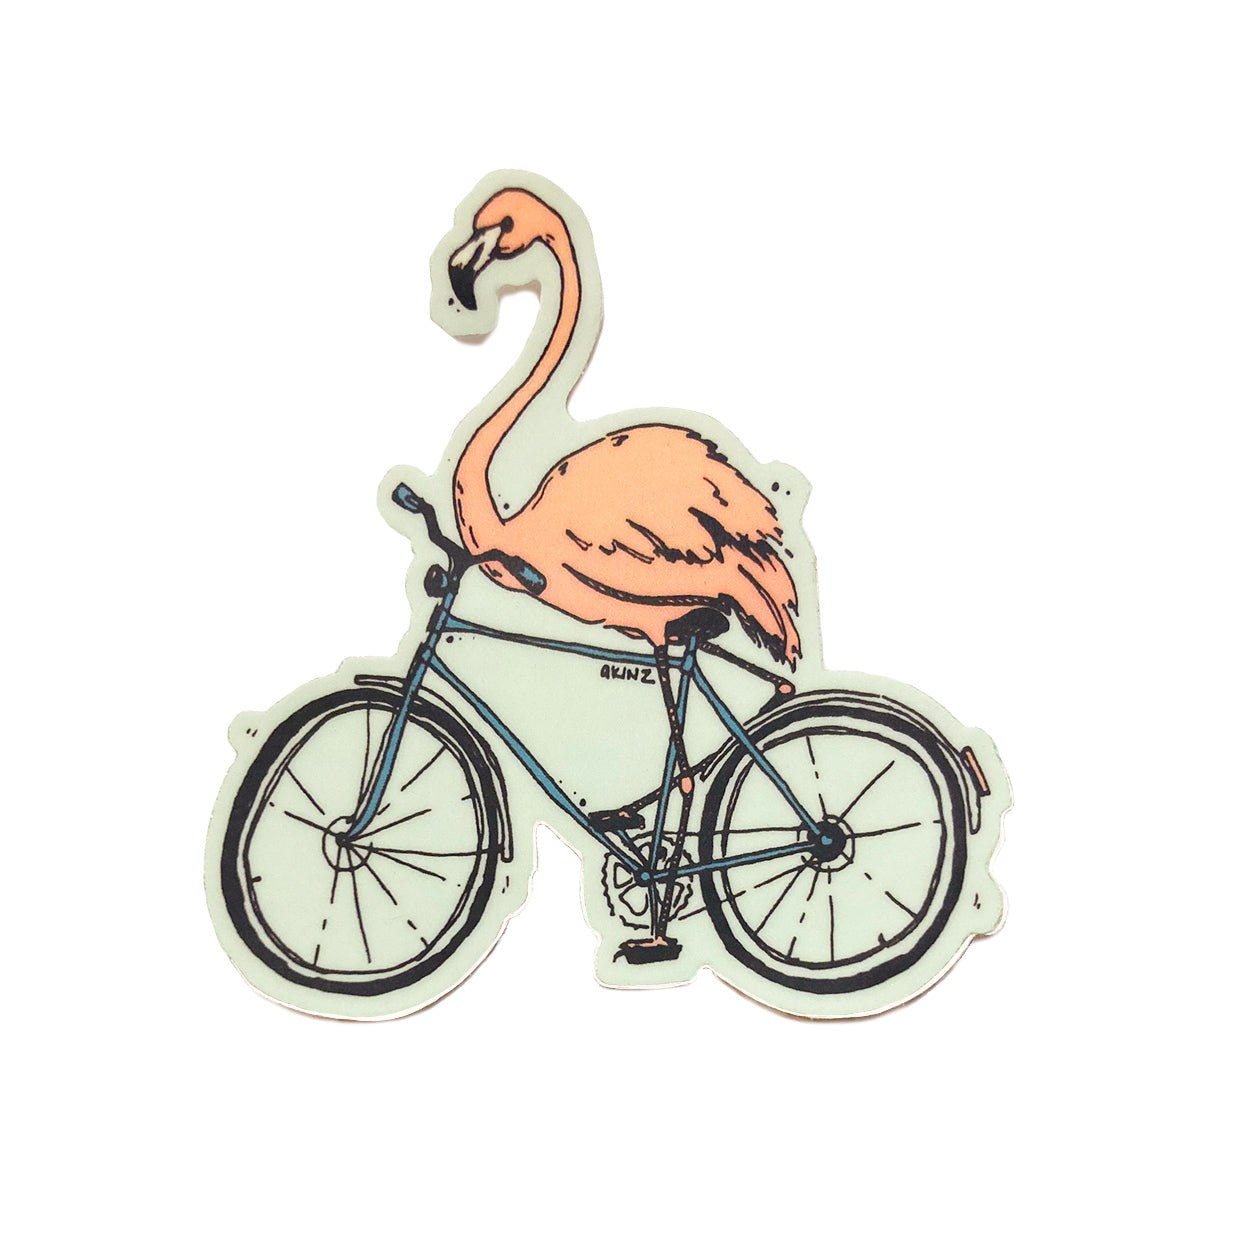 I-can-ride-my-bike-with-no-handlebars-sticker.jpg